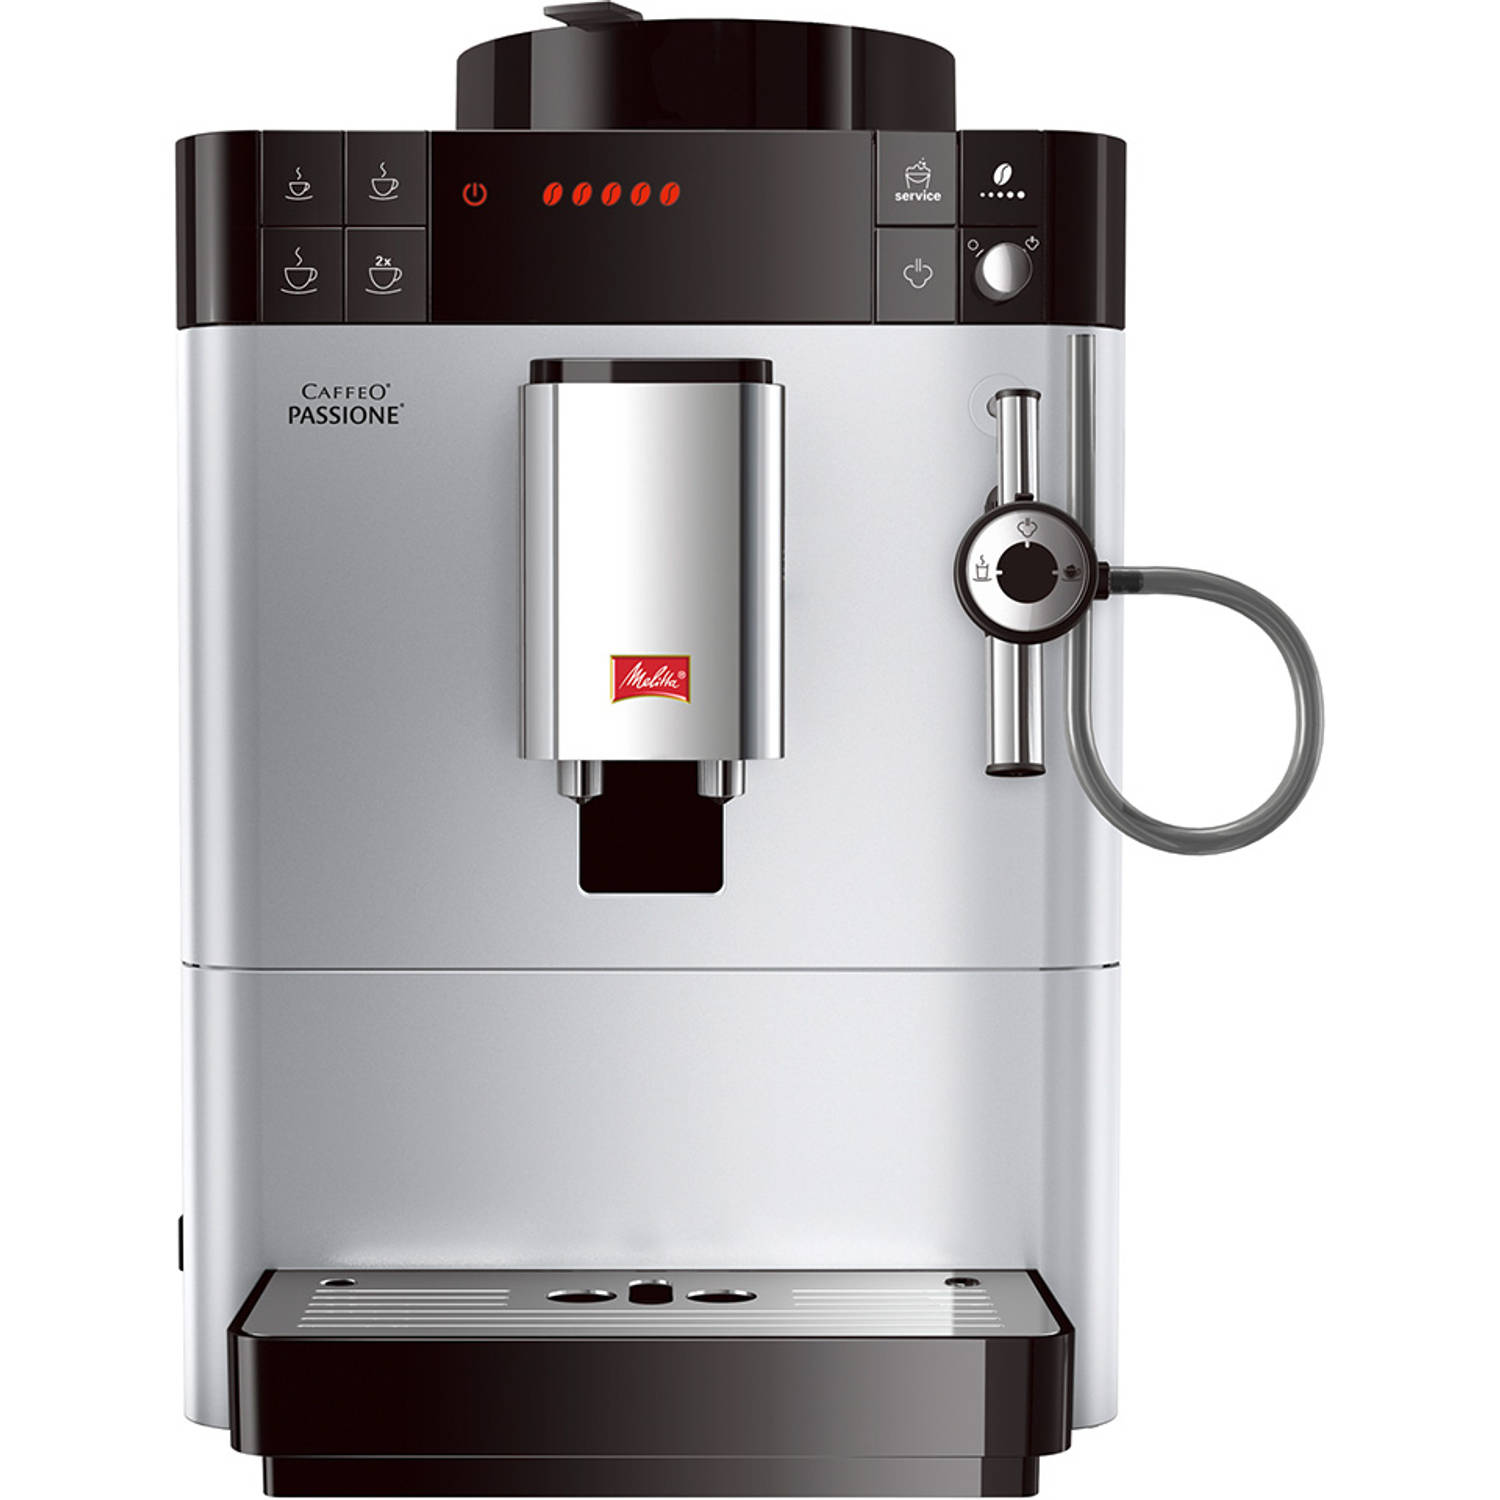 Melitta volautomatische koffiemachine Caffeo Passion F530-101